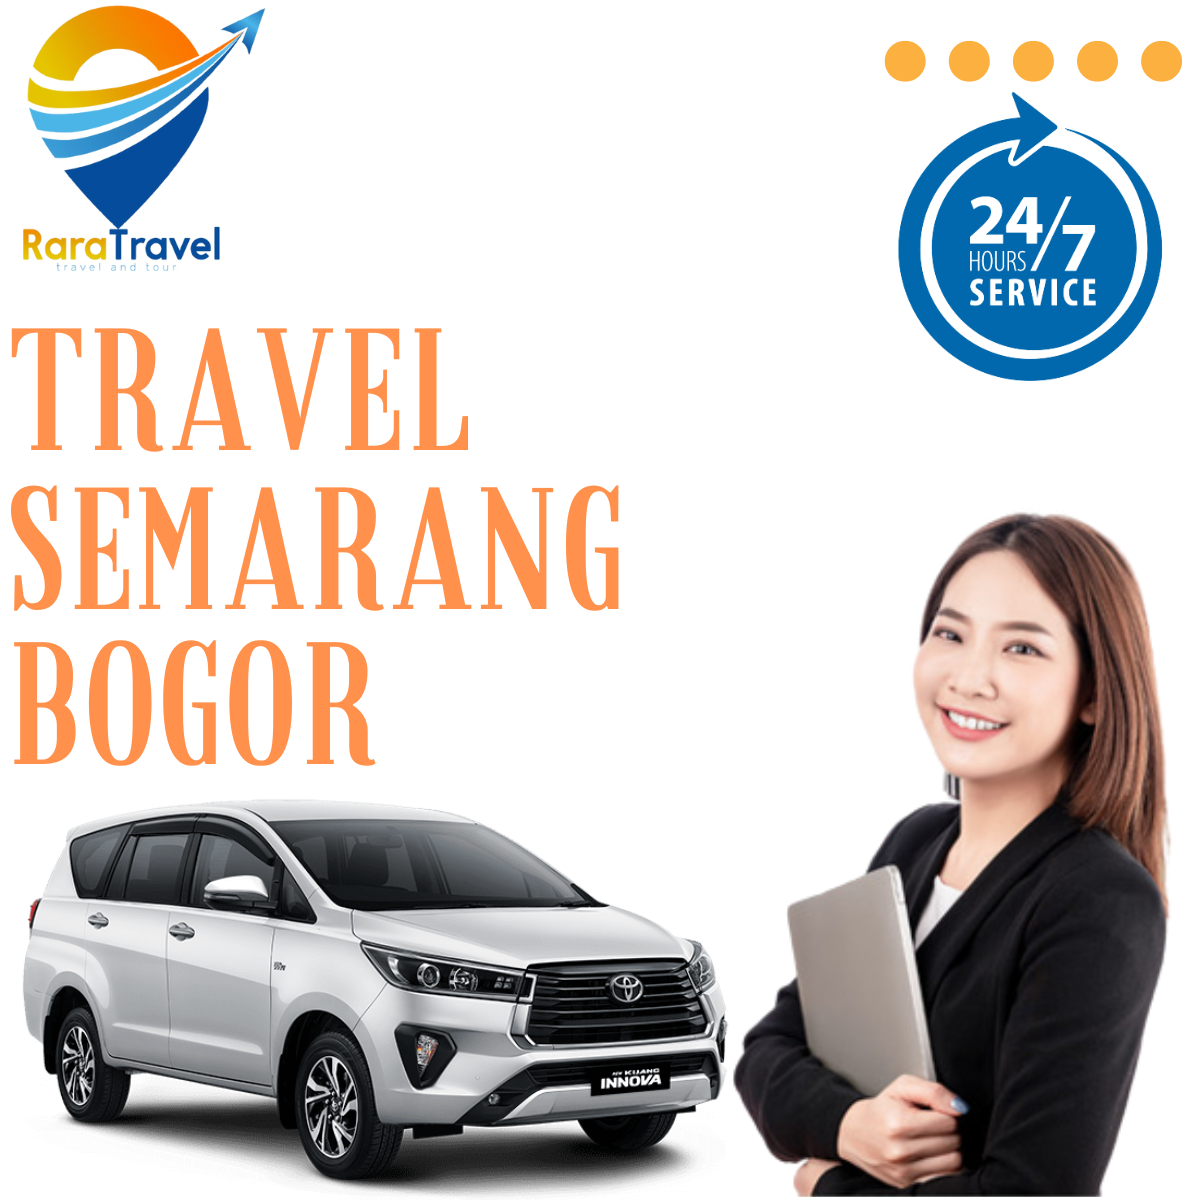 Travel Semarang Bogor PP Harga Ticket Murah - RARATRAVEL.ID